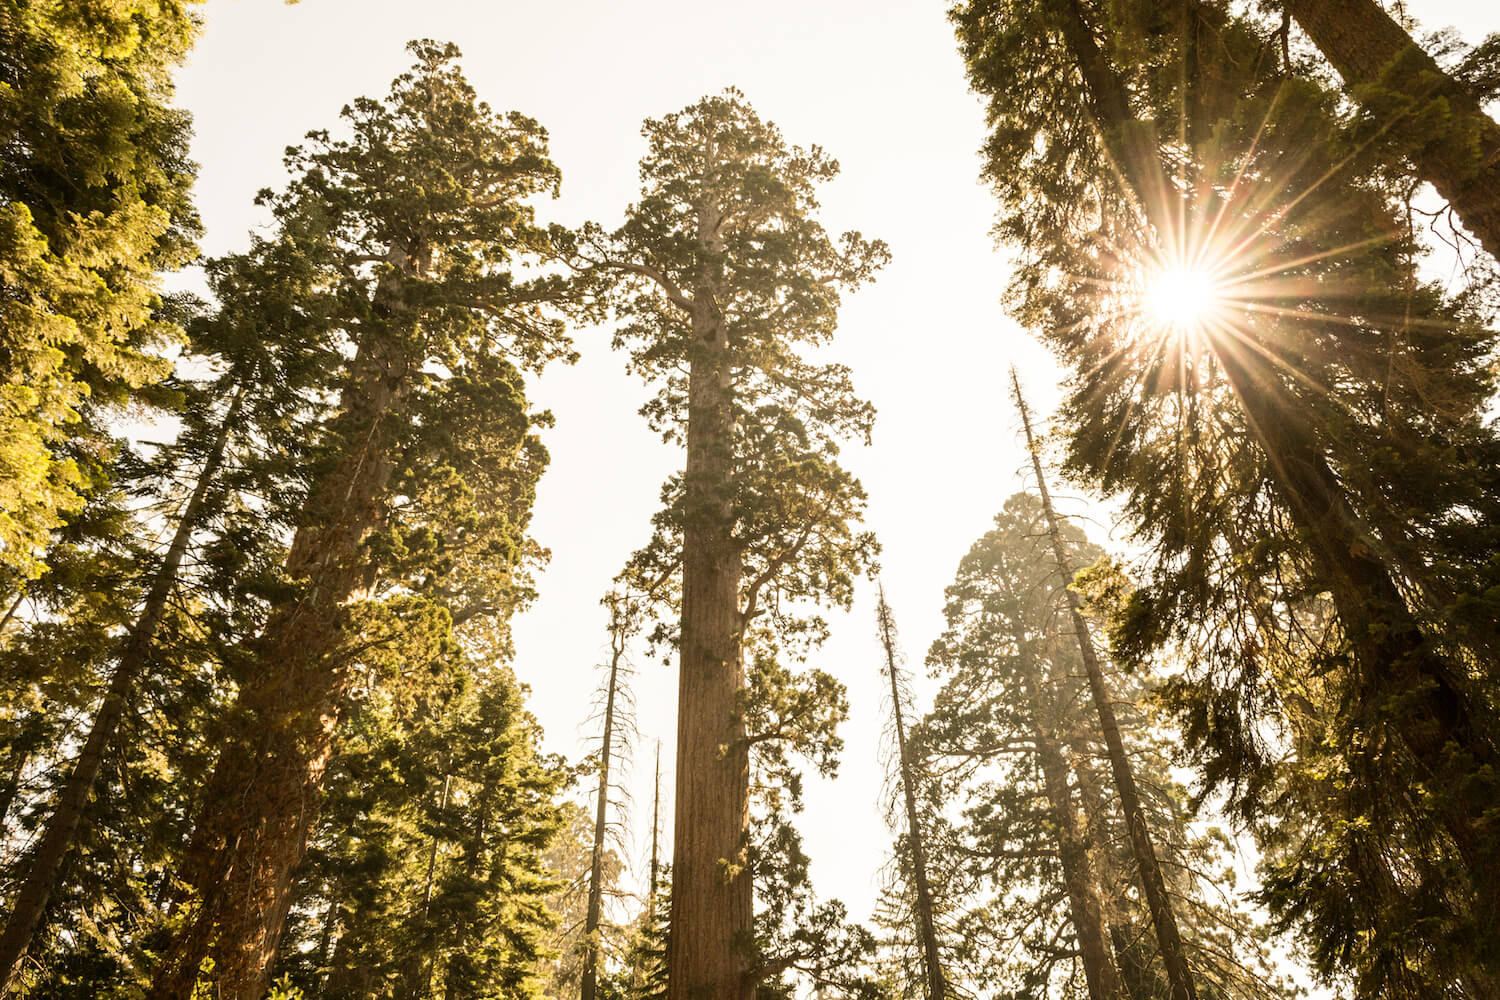 Yosemite National Park top world destination for families